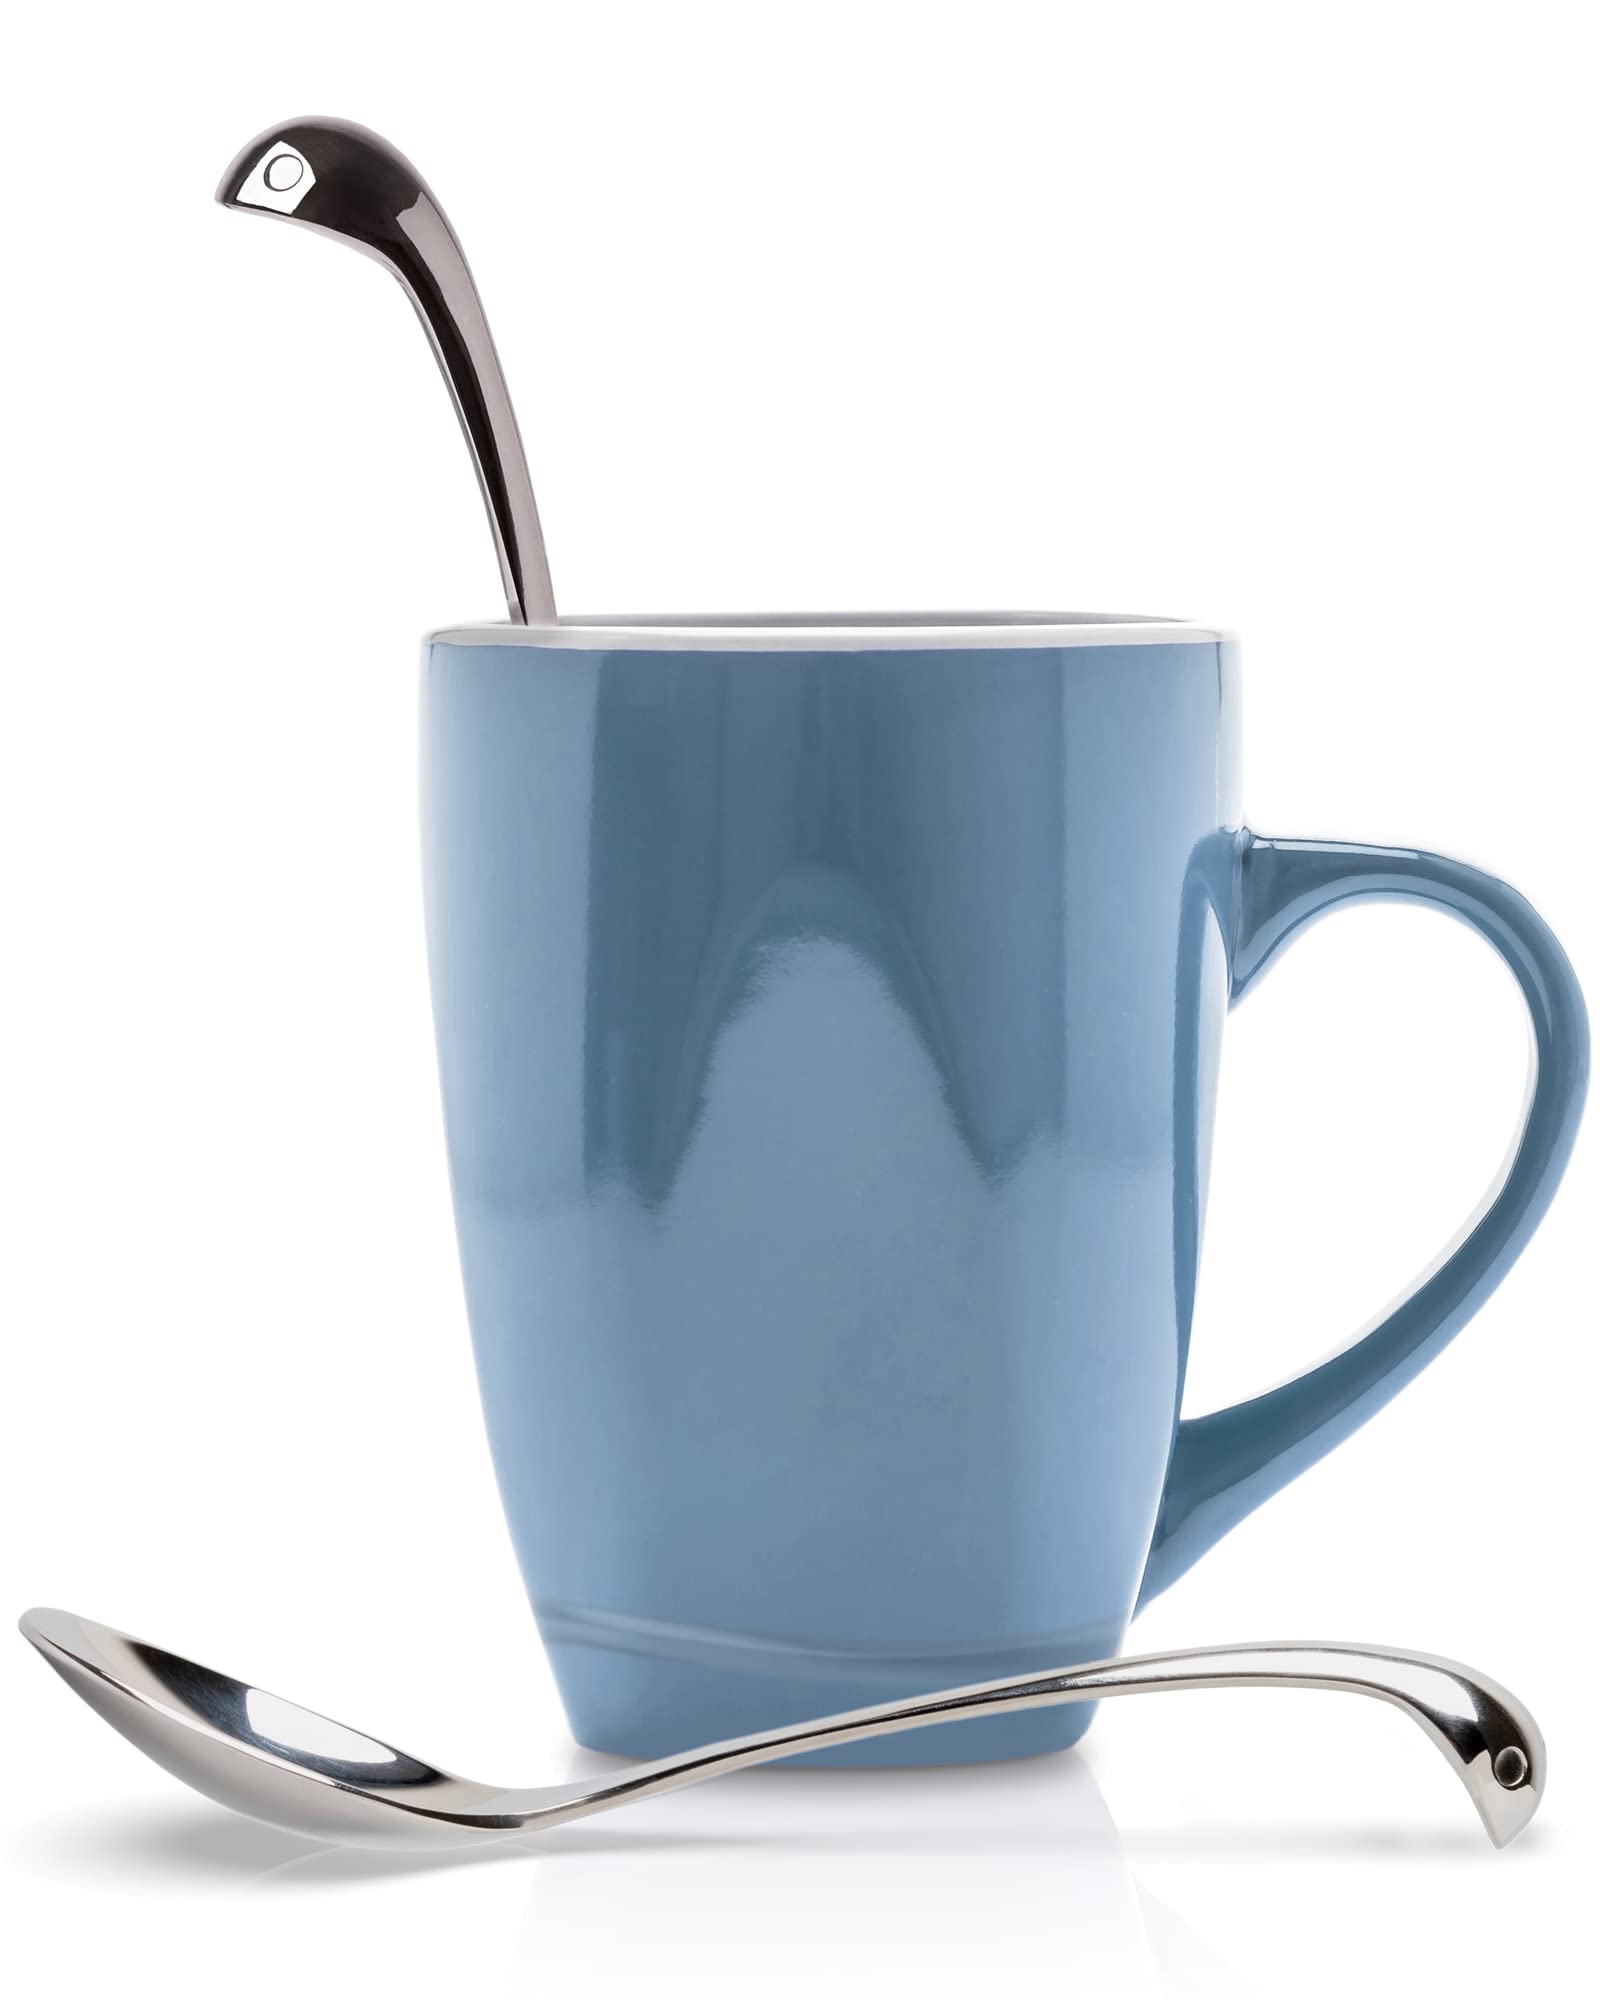 OTOTO Sweet Nessie Sugar Spoon - Stainless Steel Tea Spoon - 100% Food Grade & Dishwasher Safe - Perfect Spoon for Tea & Coffee